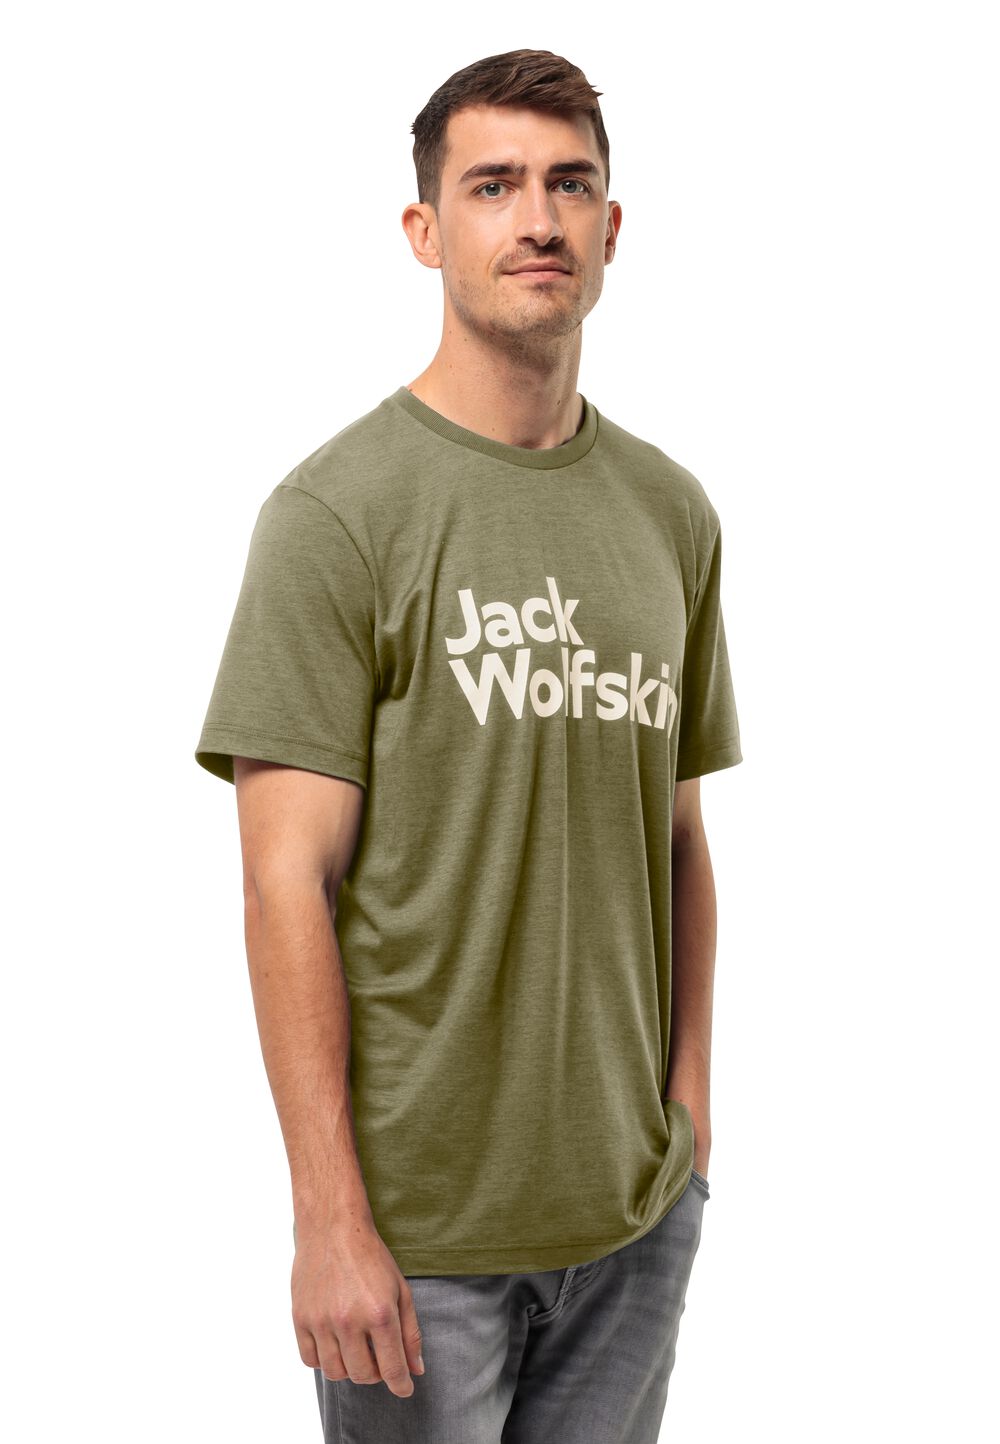 Jack Wolfskin Brand T-Shirt Men Functioneel shirt Heren L bruin bay leaf